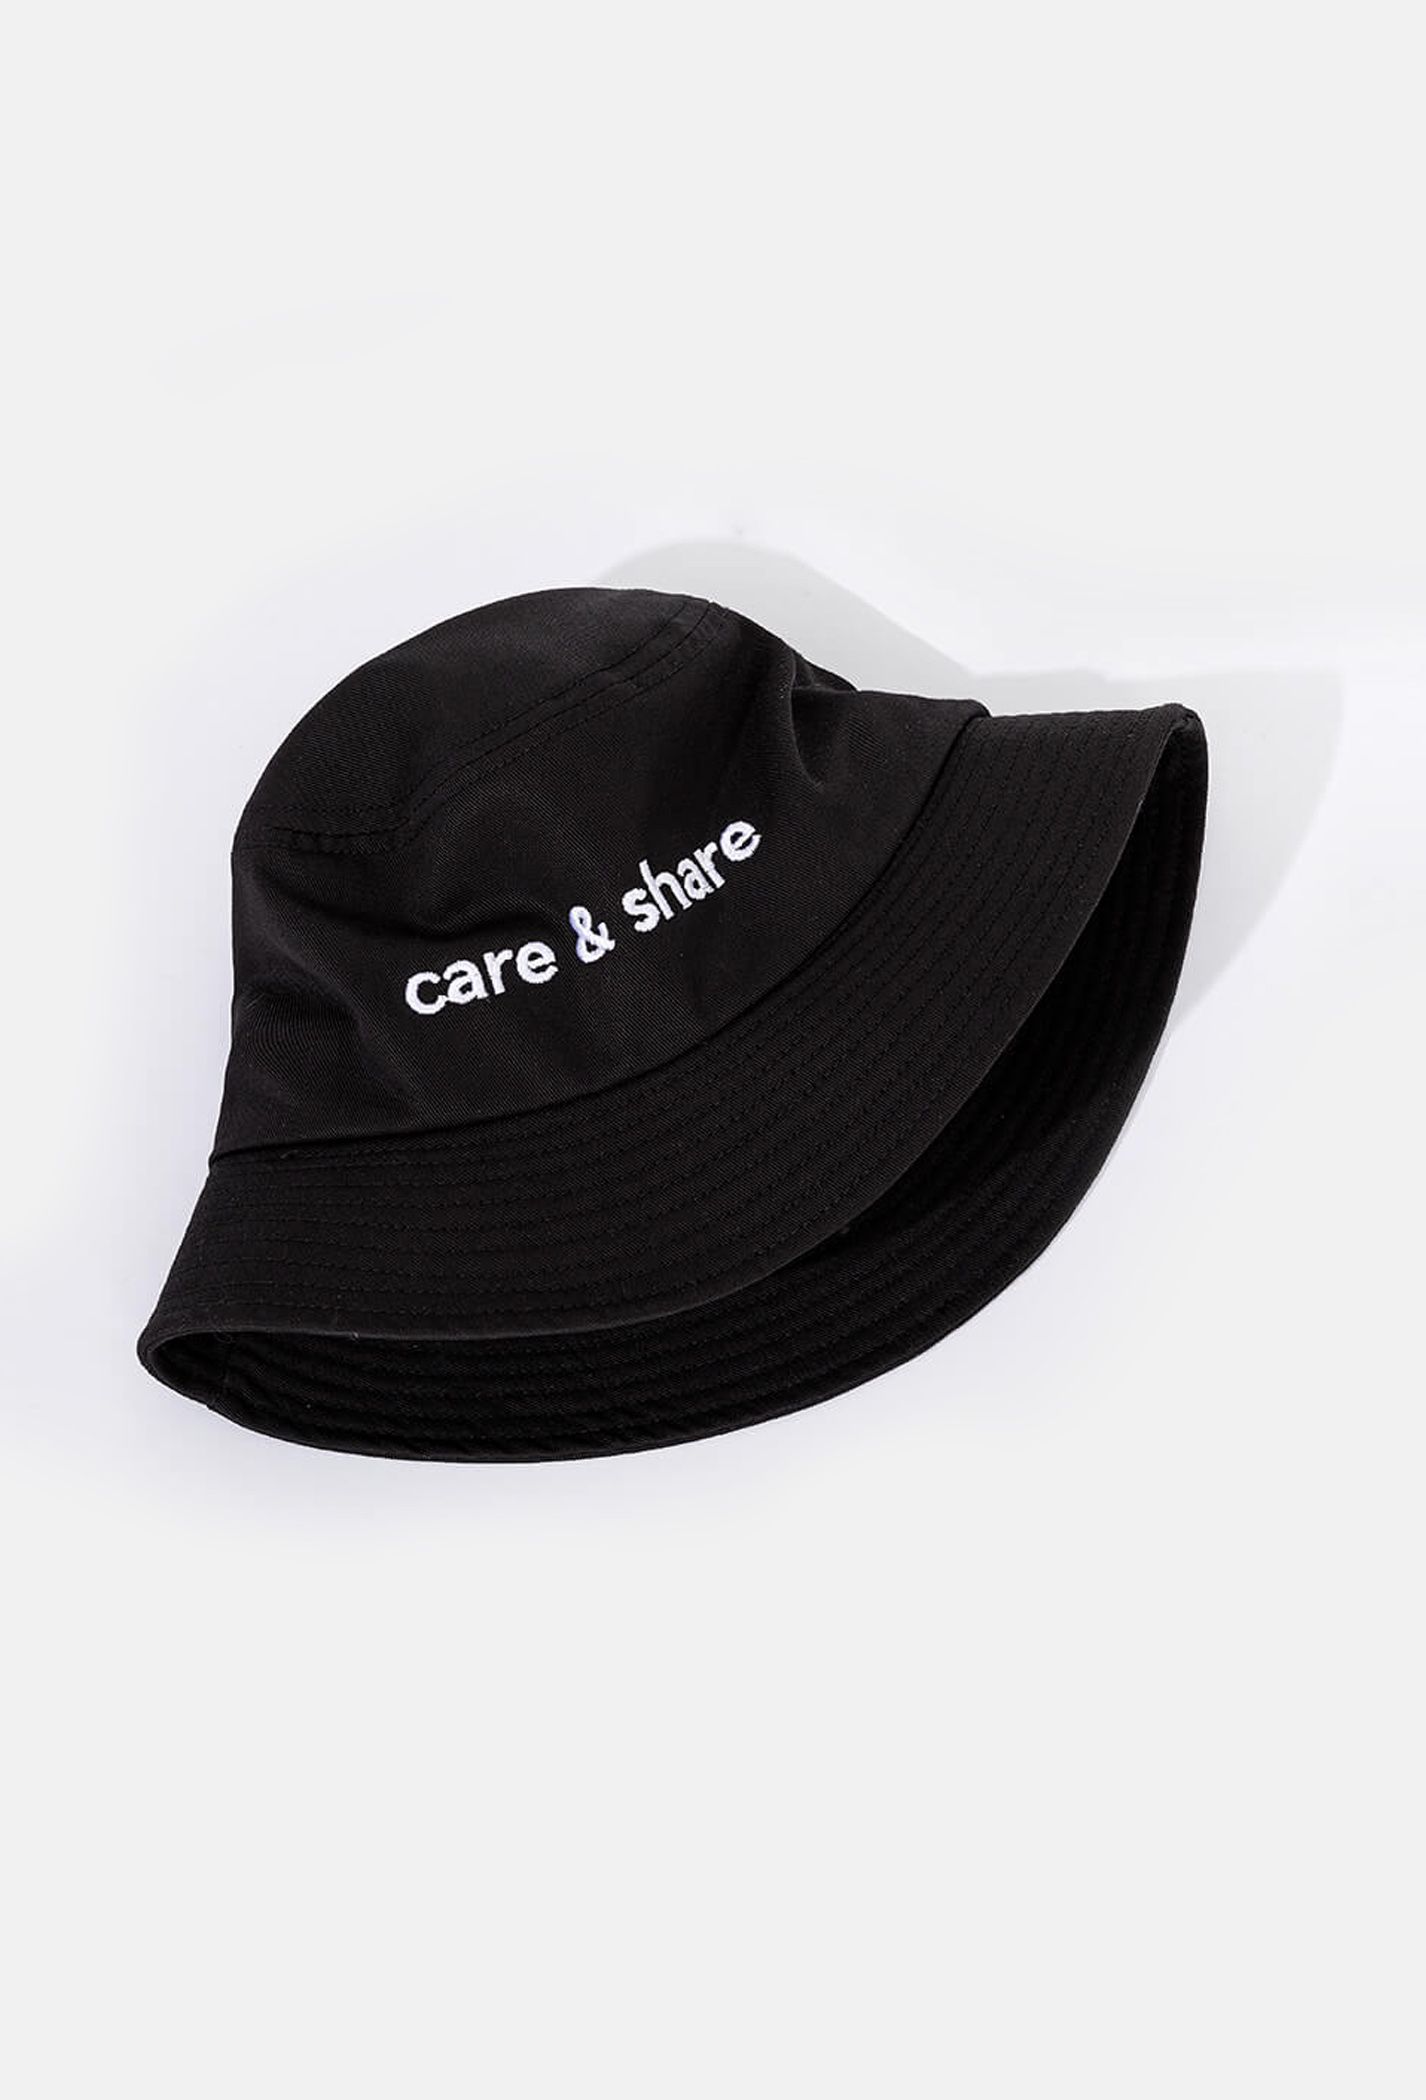 Mũ/Nón Bucket Hat thêu Care & Share Typo Đen 1